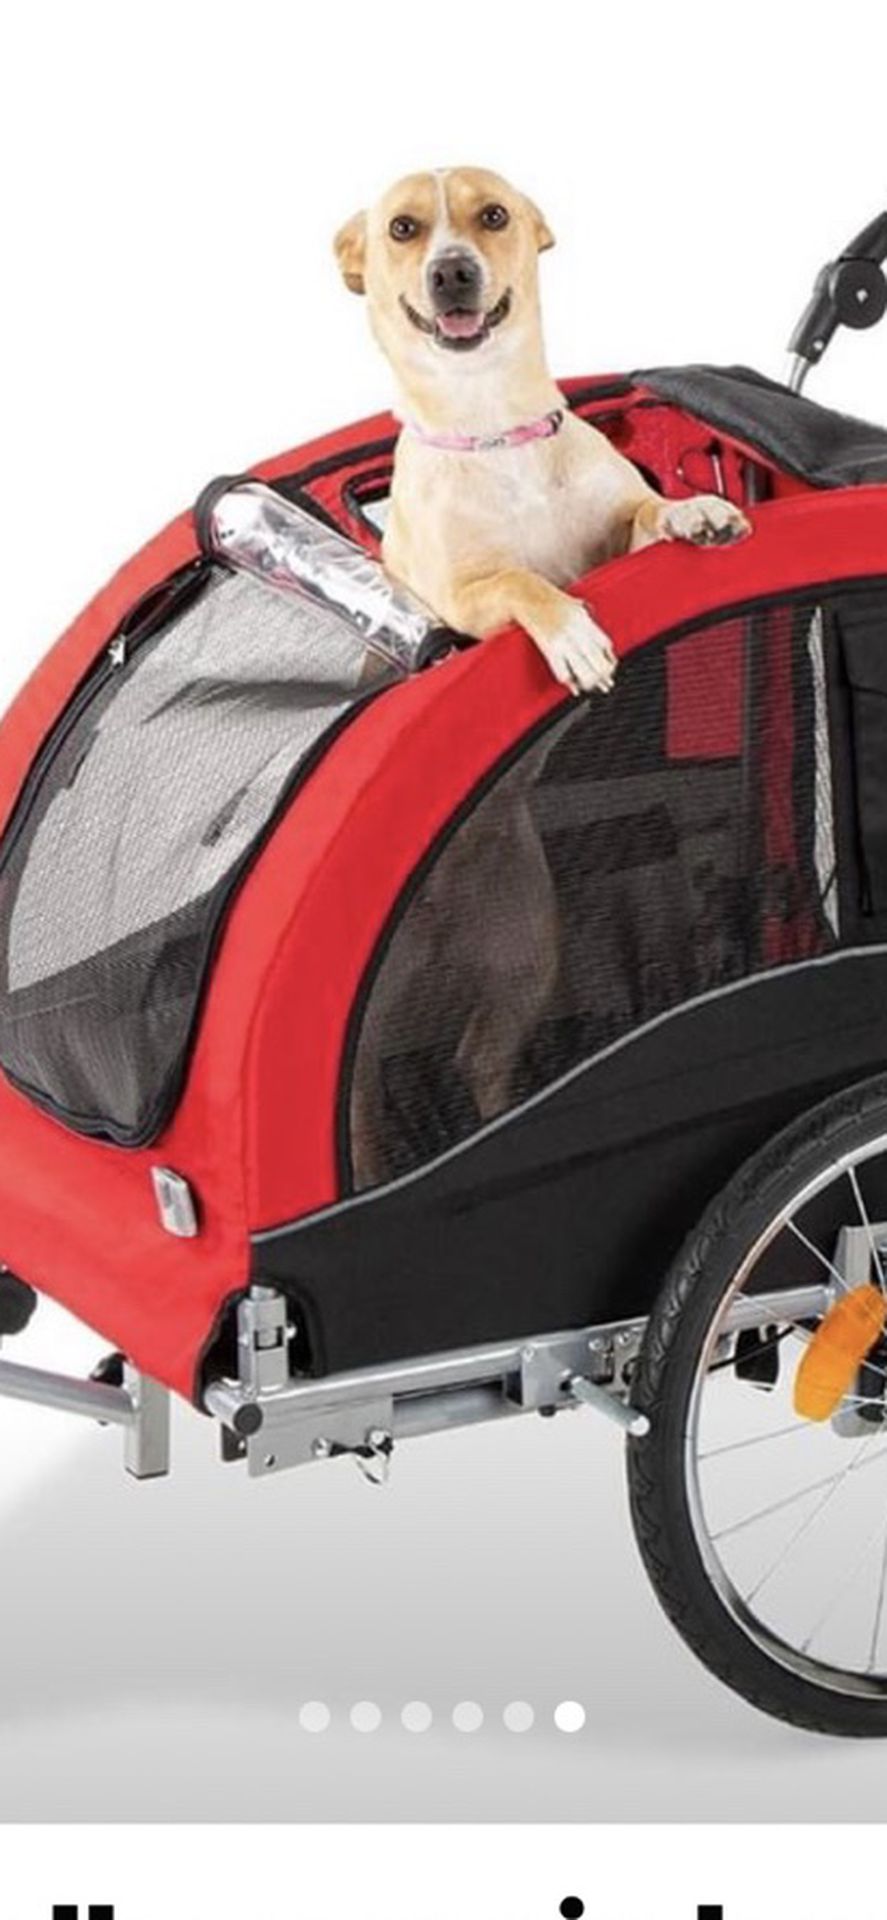 Pet Stroller New In Box